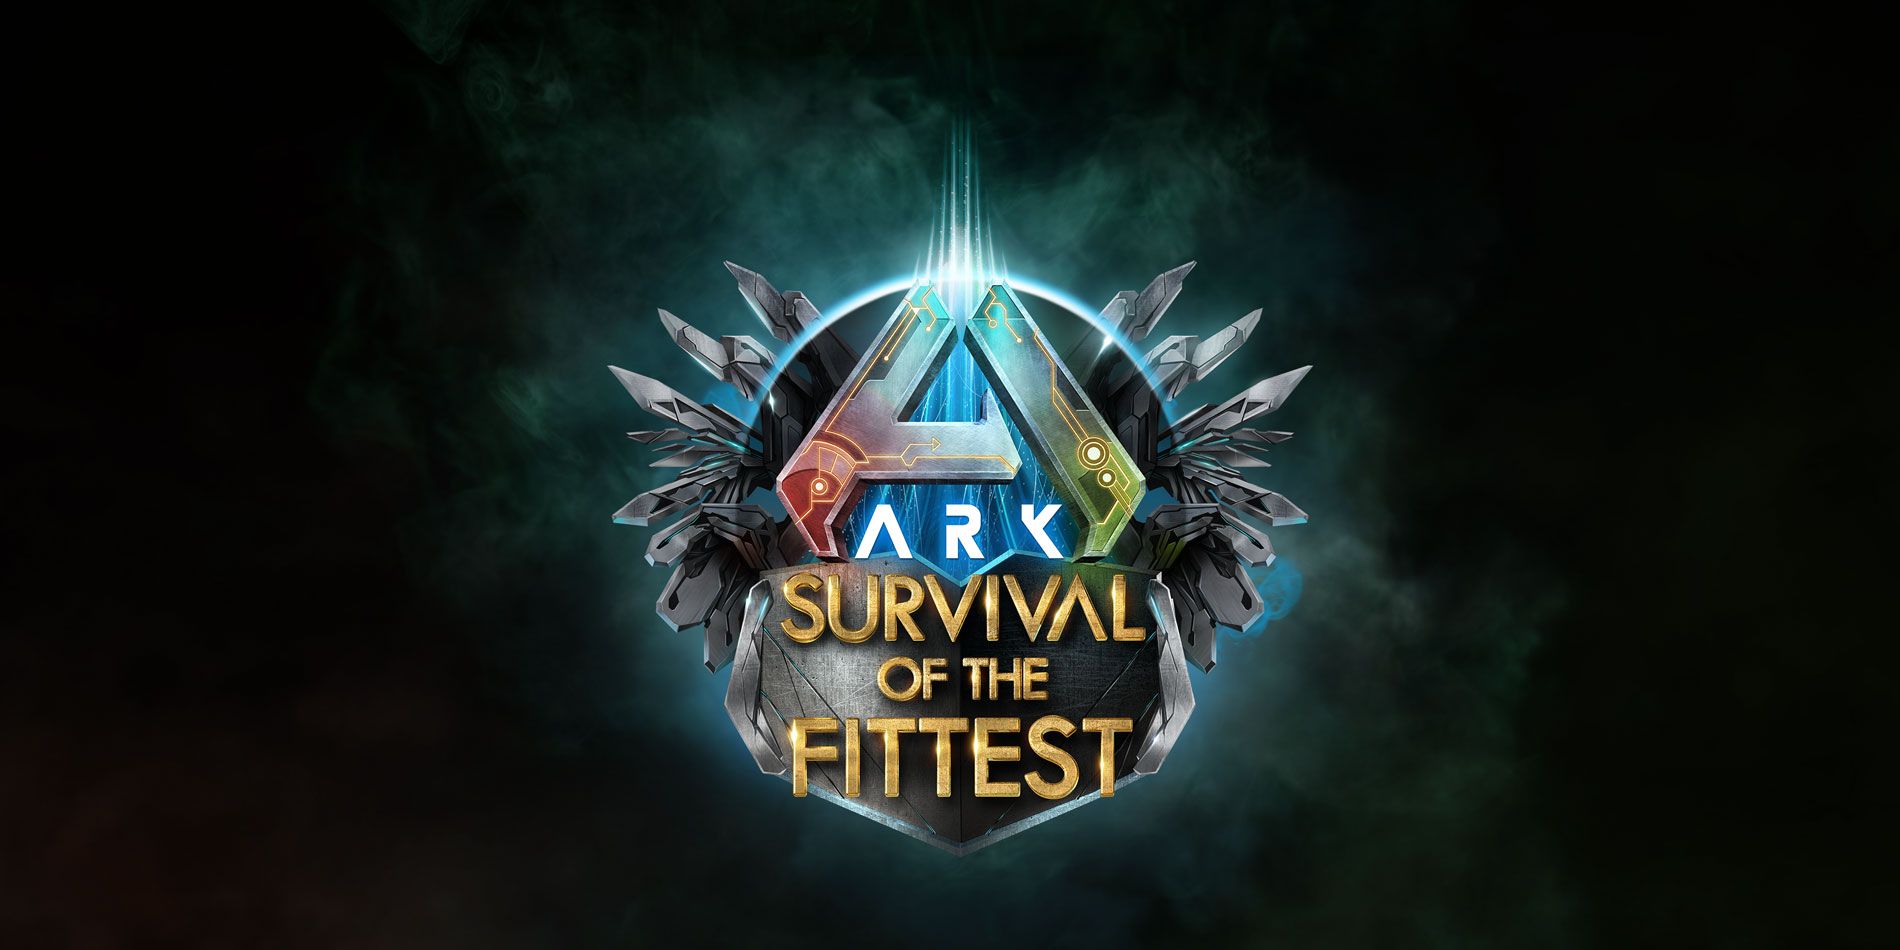 Survival Of The Fittest Key Art for Ark: Survival Ascended. 